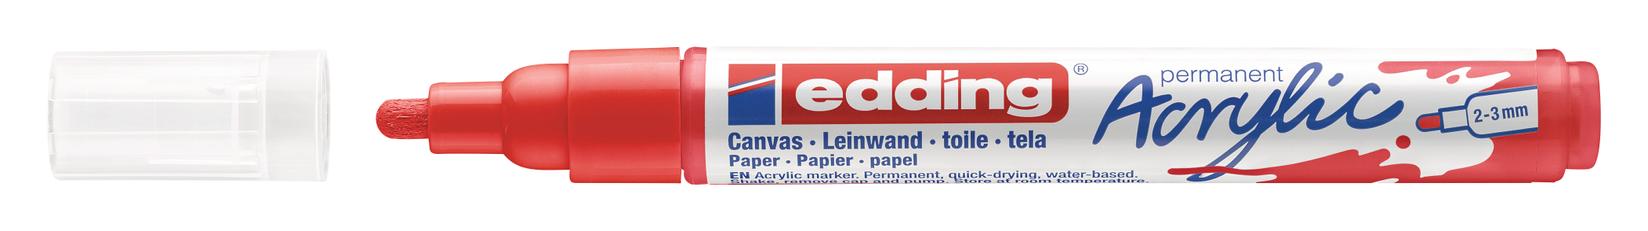 EDDING Akrilni marker medium 2-3mm obli vrh E-5100 crveni